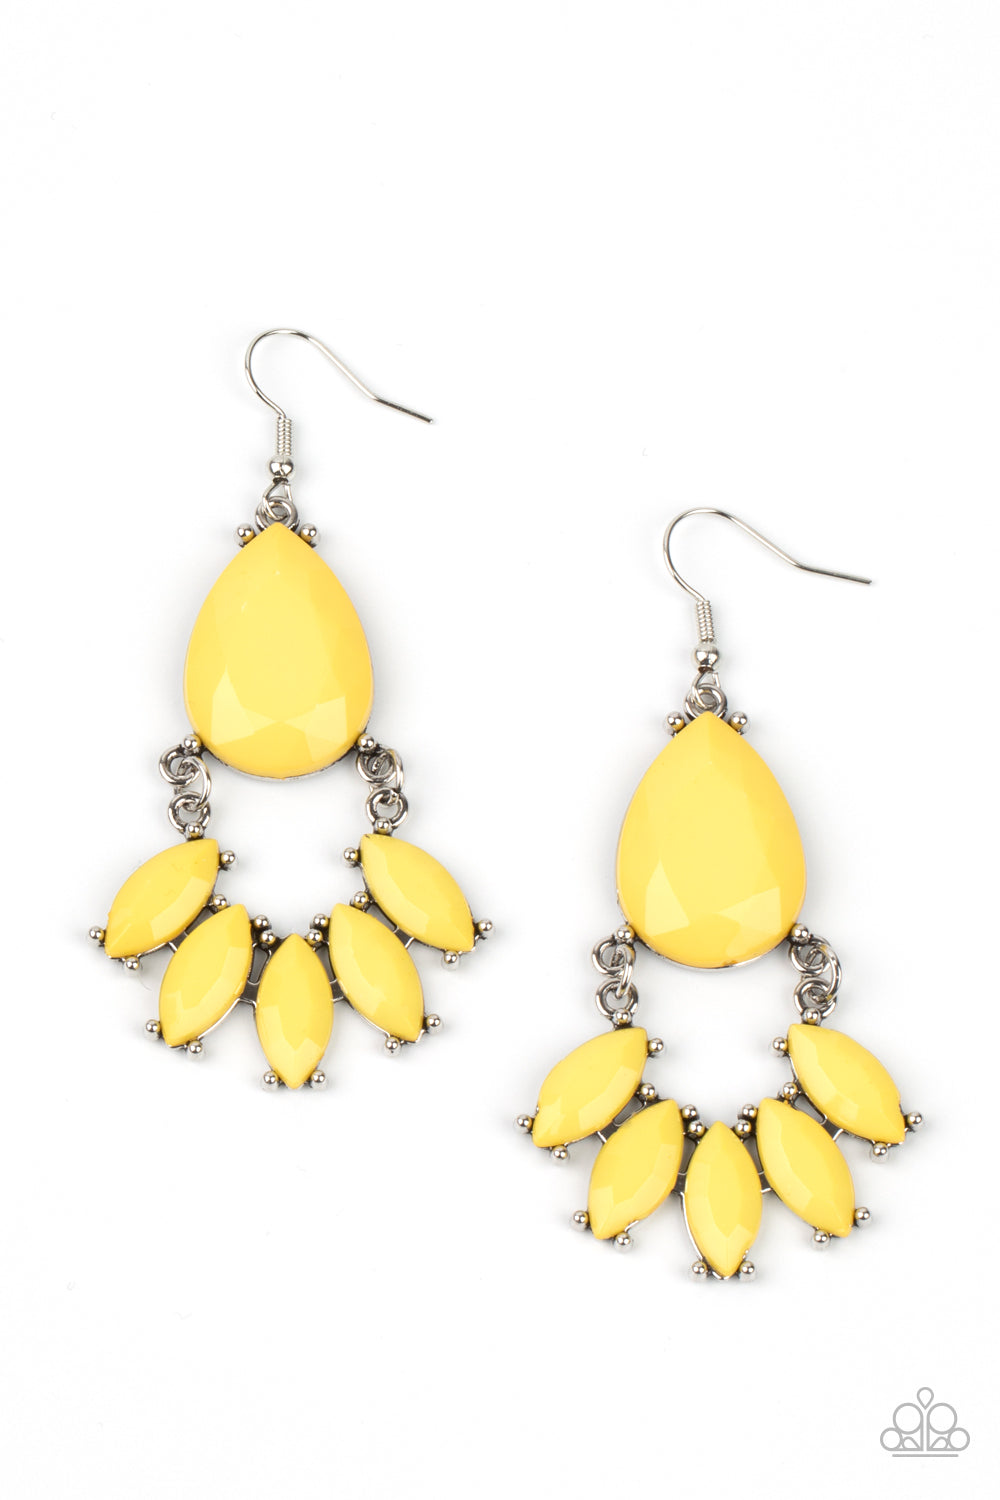 POWERHOUSE Call - Yellow Earrings - Paparazzi Accessories